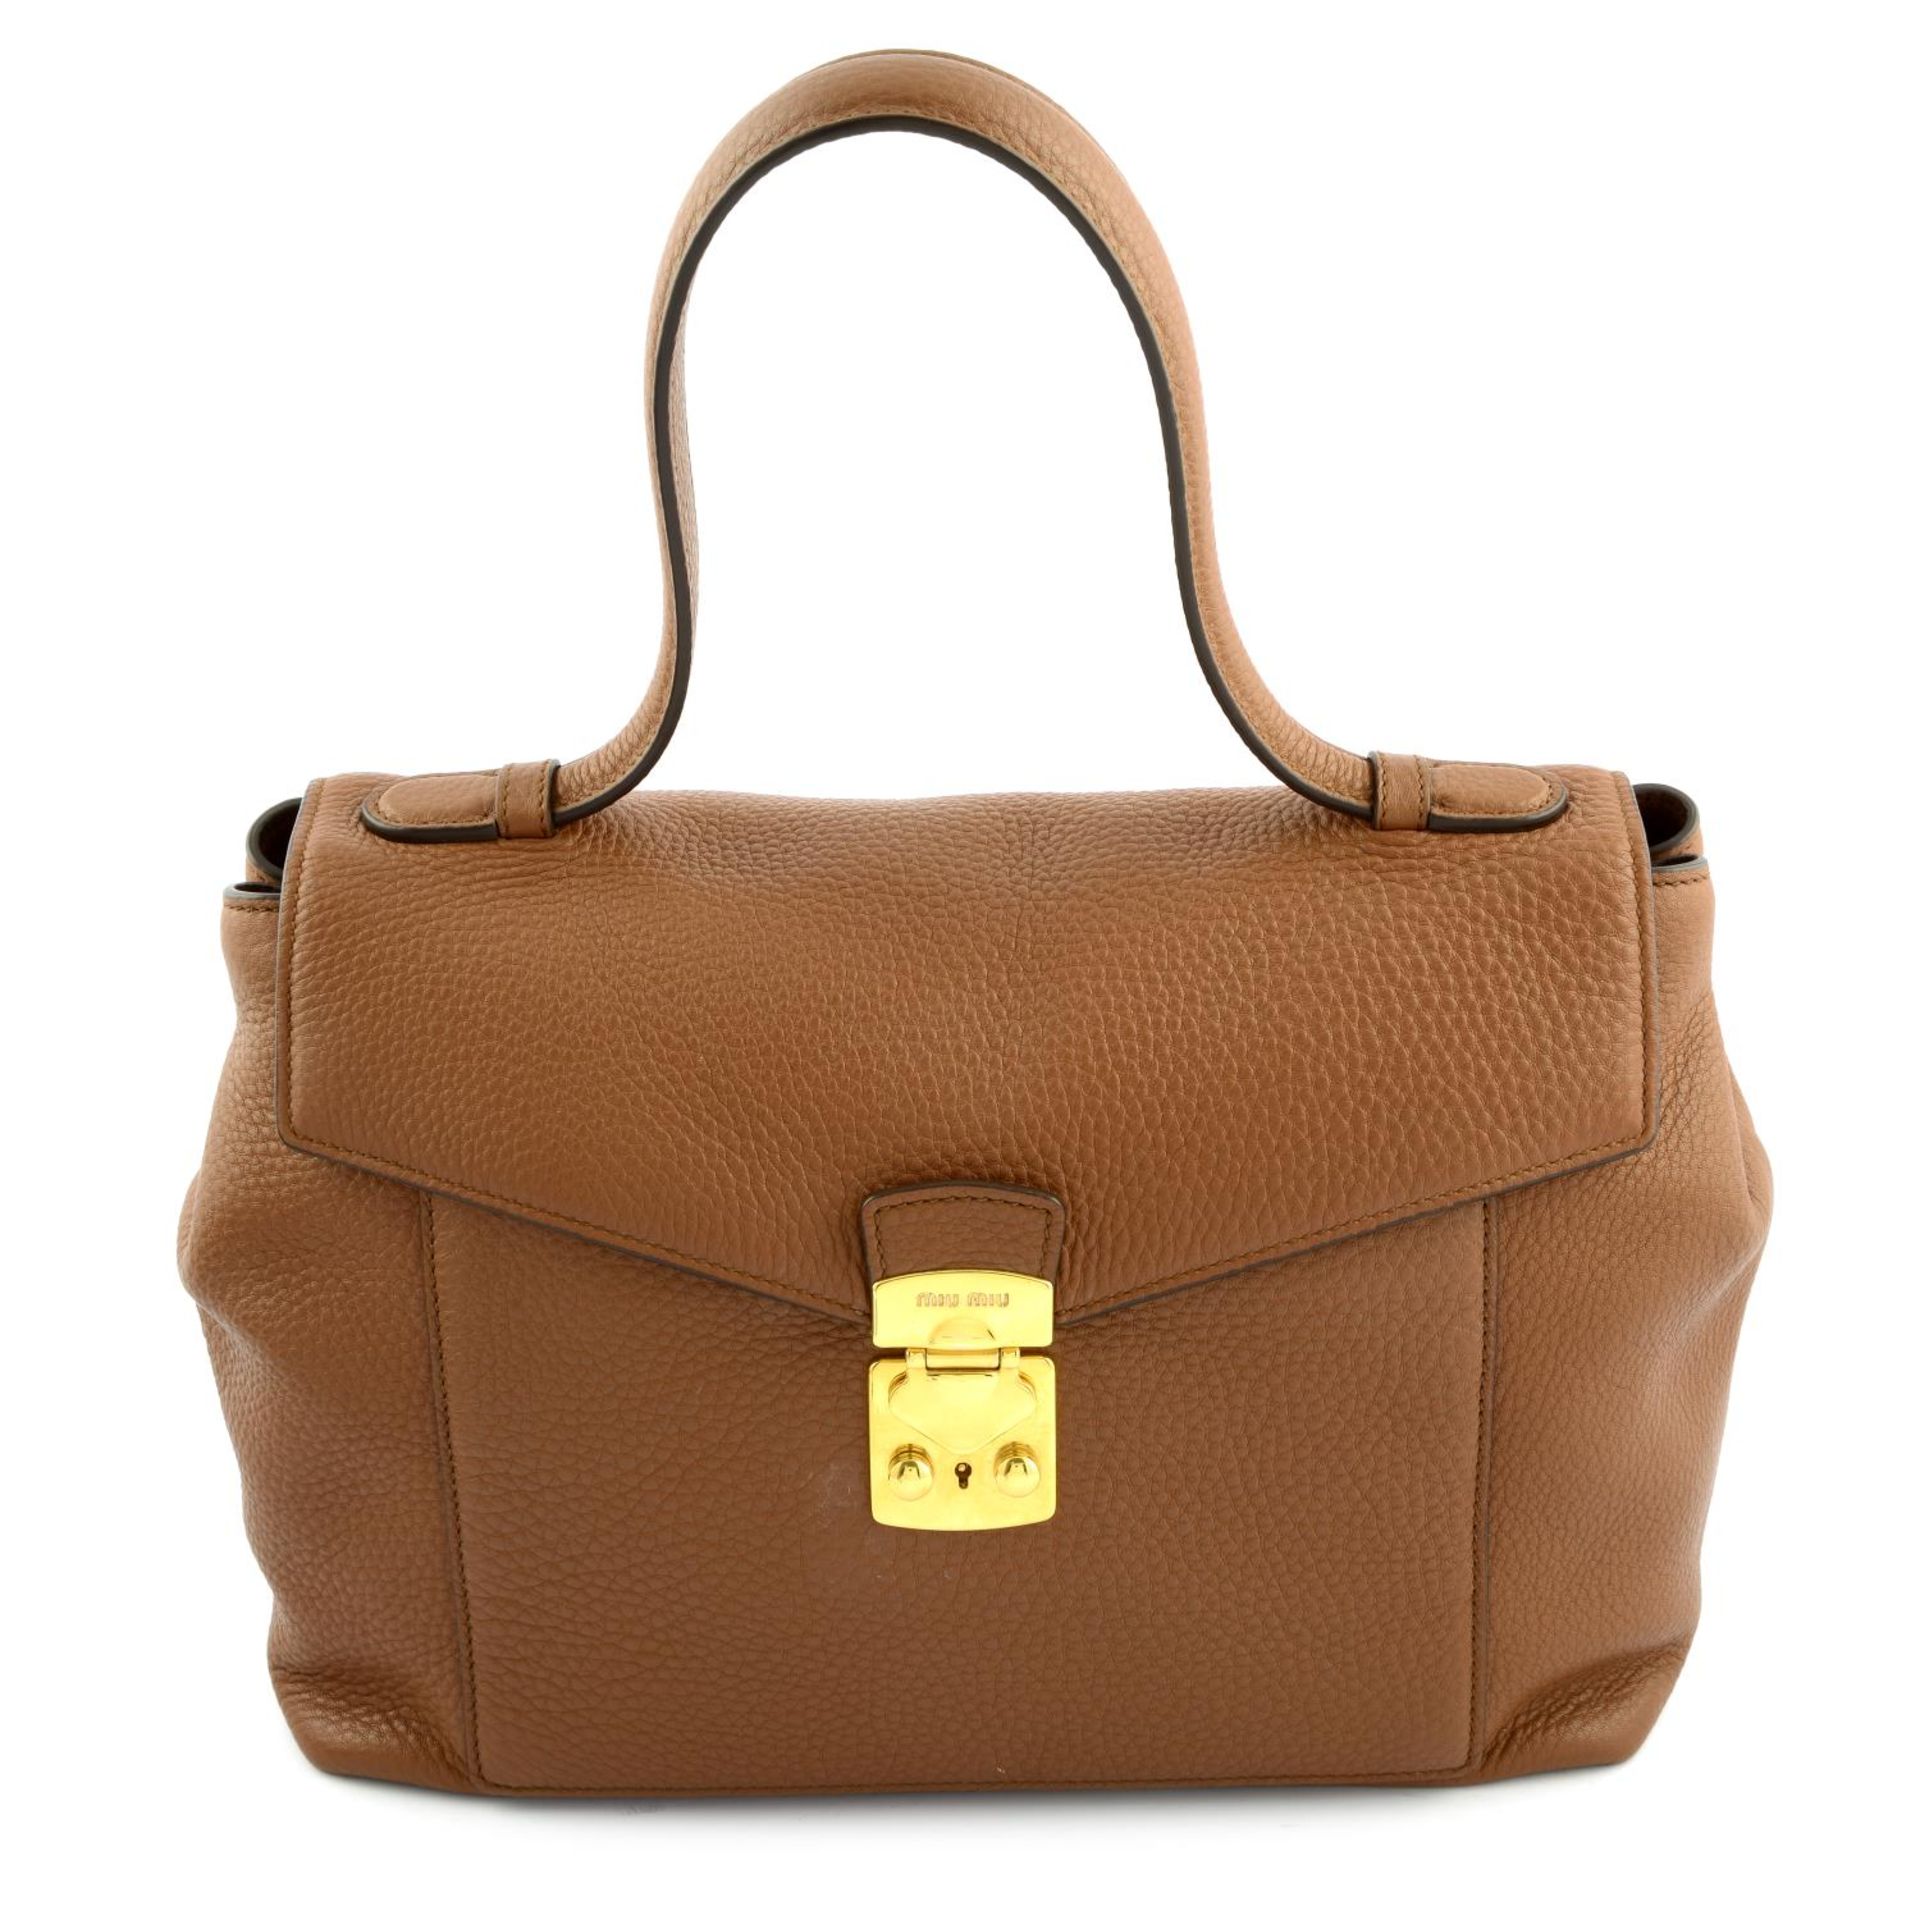 MIU MIU - a Vitello tan leather handbag.